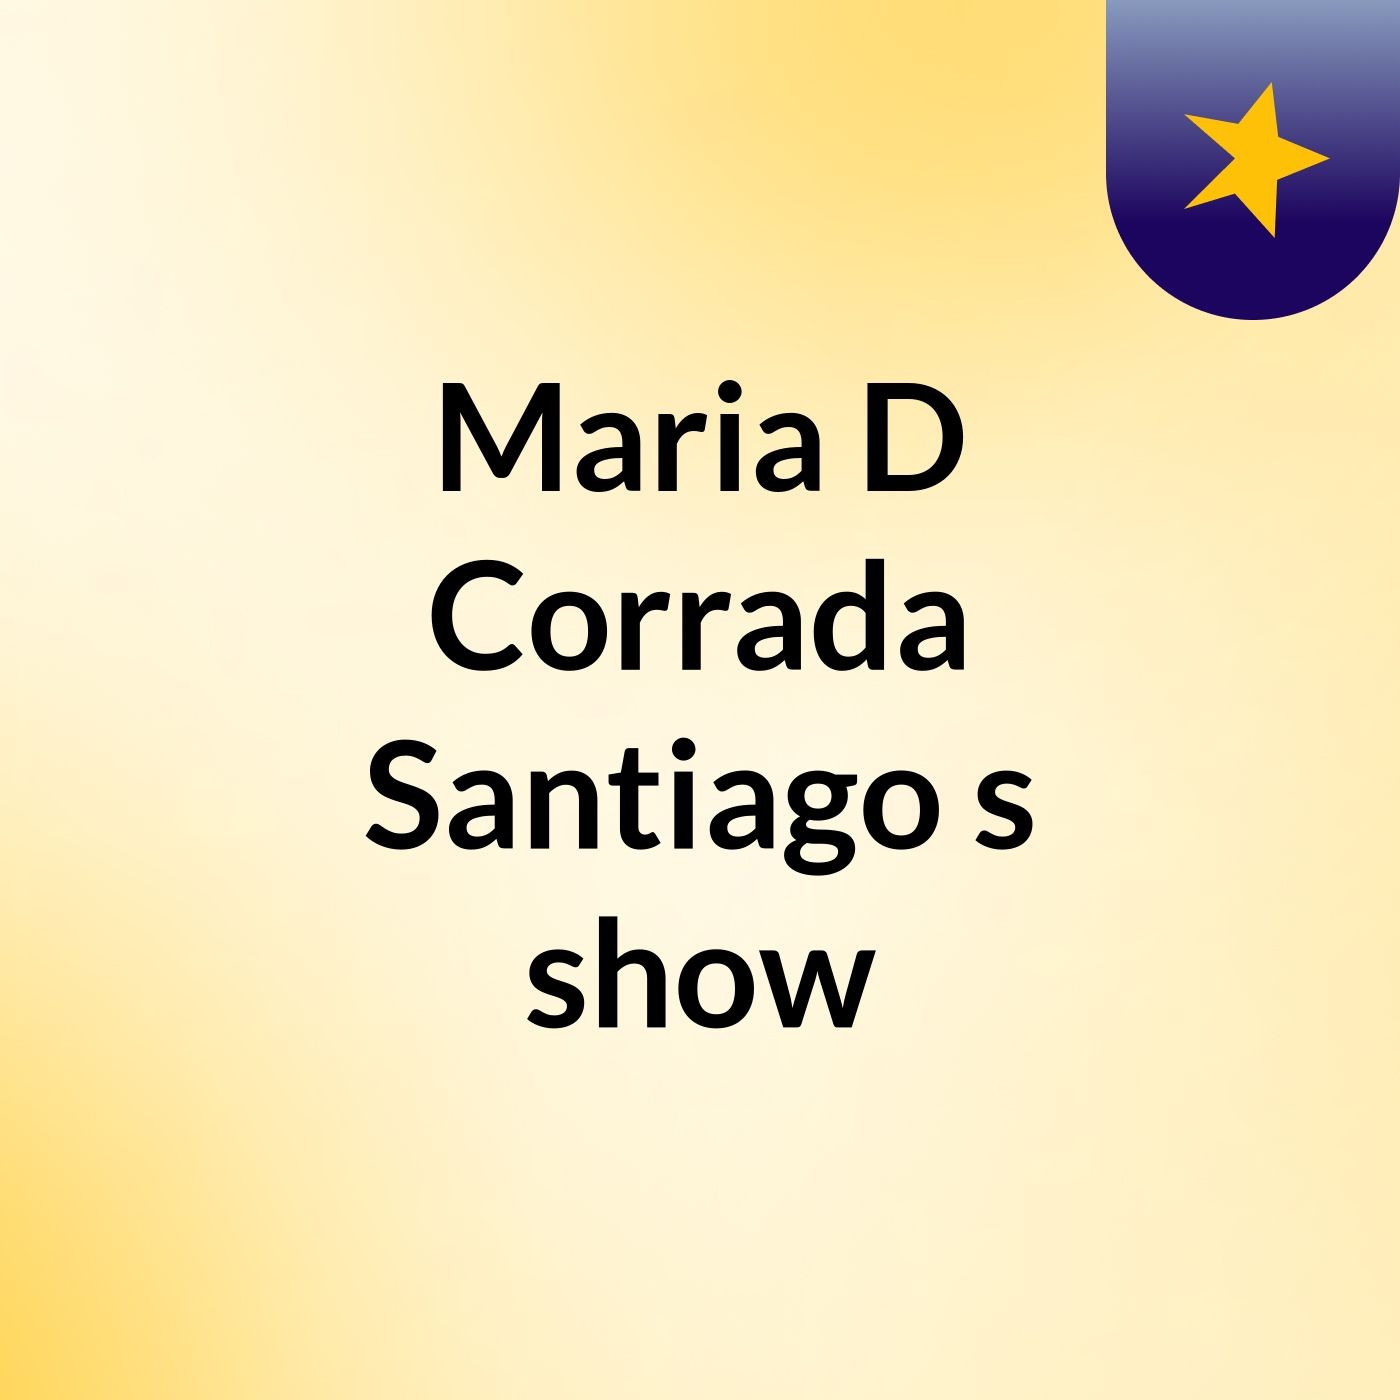 Maria D Corrada Santiago's show